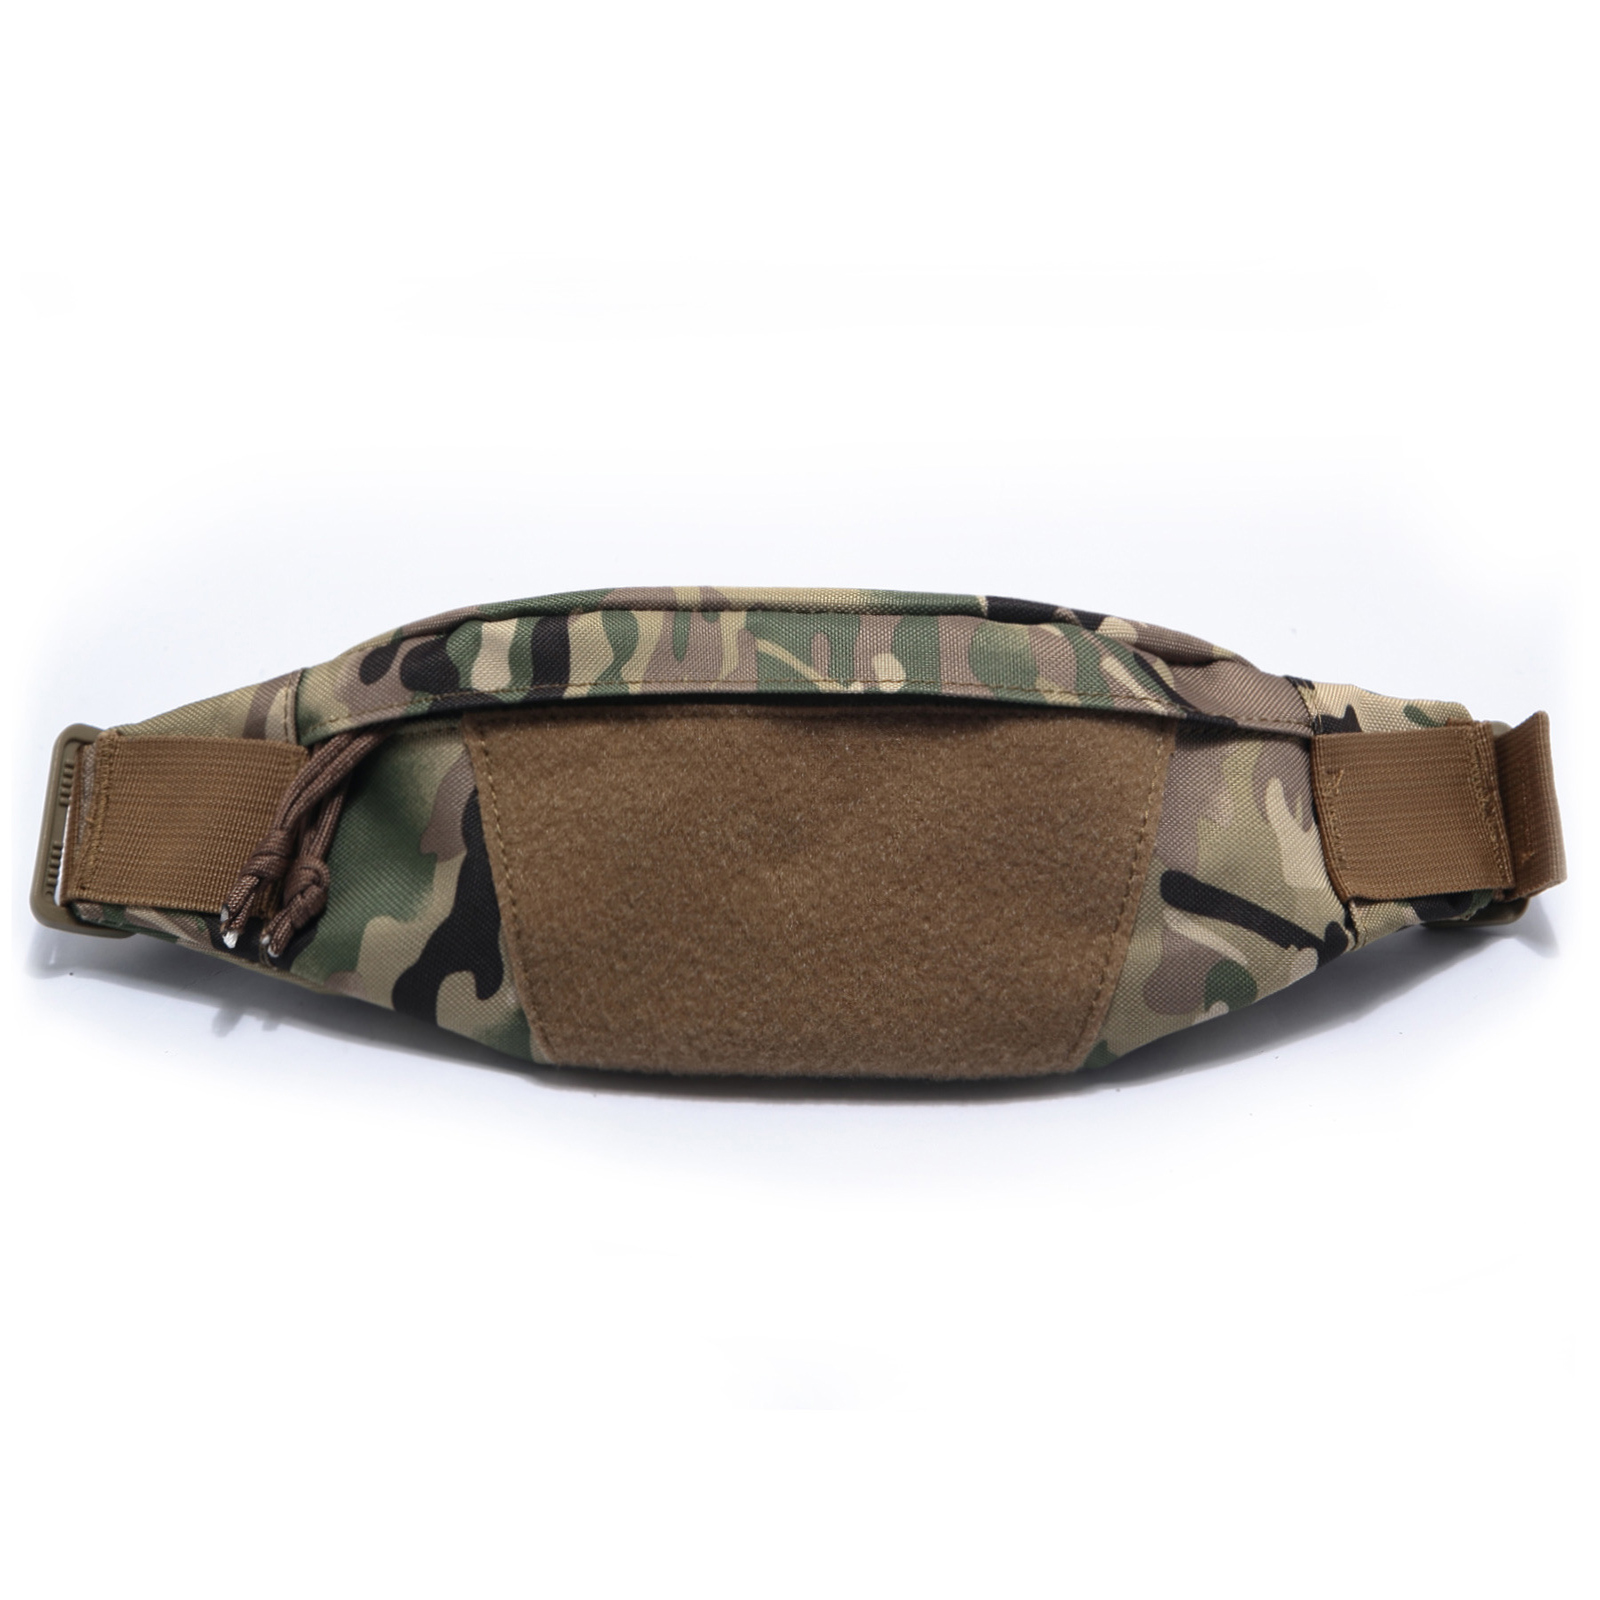 Camouflage-Tactical-Waist-Bag-Cross-Bag-Tactical-Waist-Bag-Outdoor-Fitness-Leisure-Bag-1568909-8